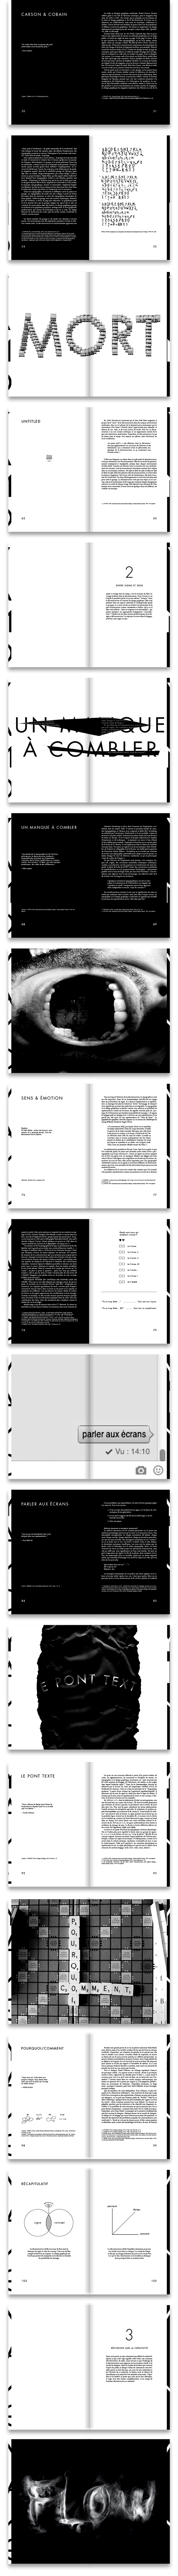 thesis design graphisme graphique print book black White editorial lettering diseño Gráficos Layout Mémoire Futura